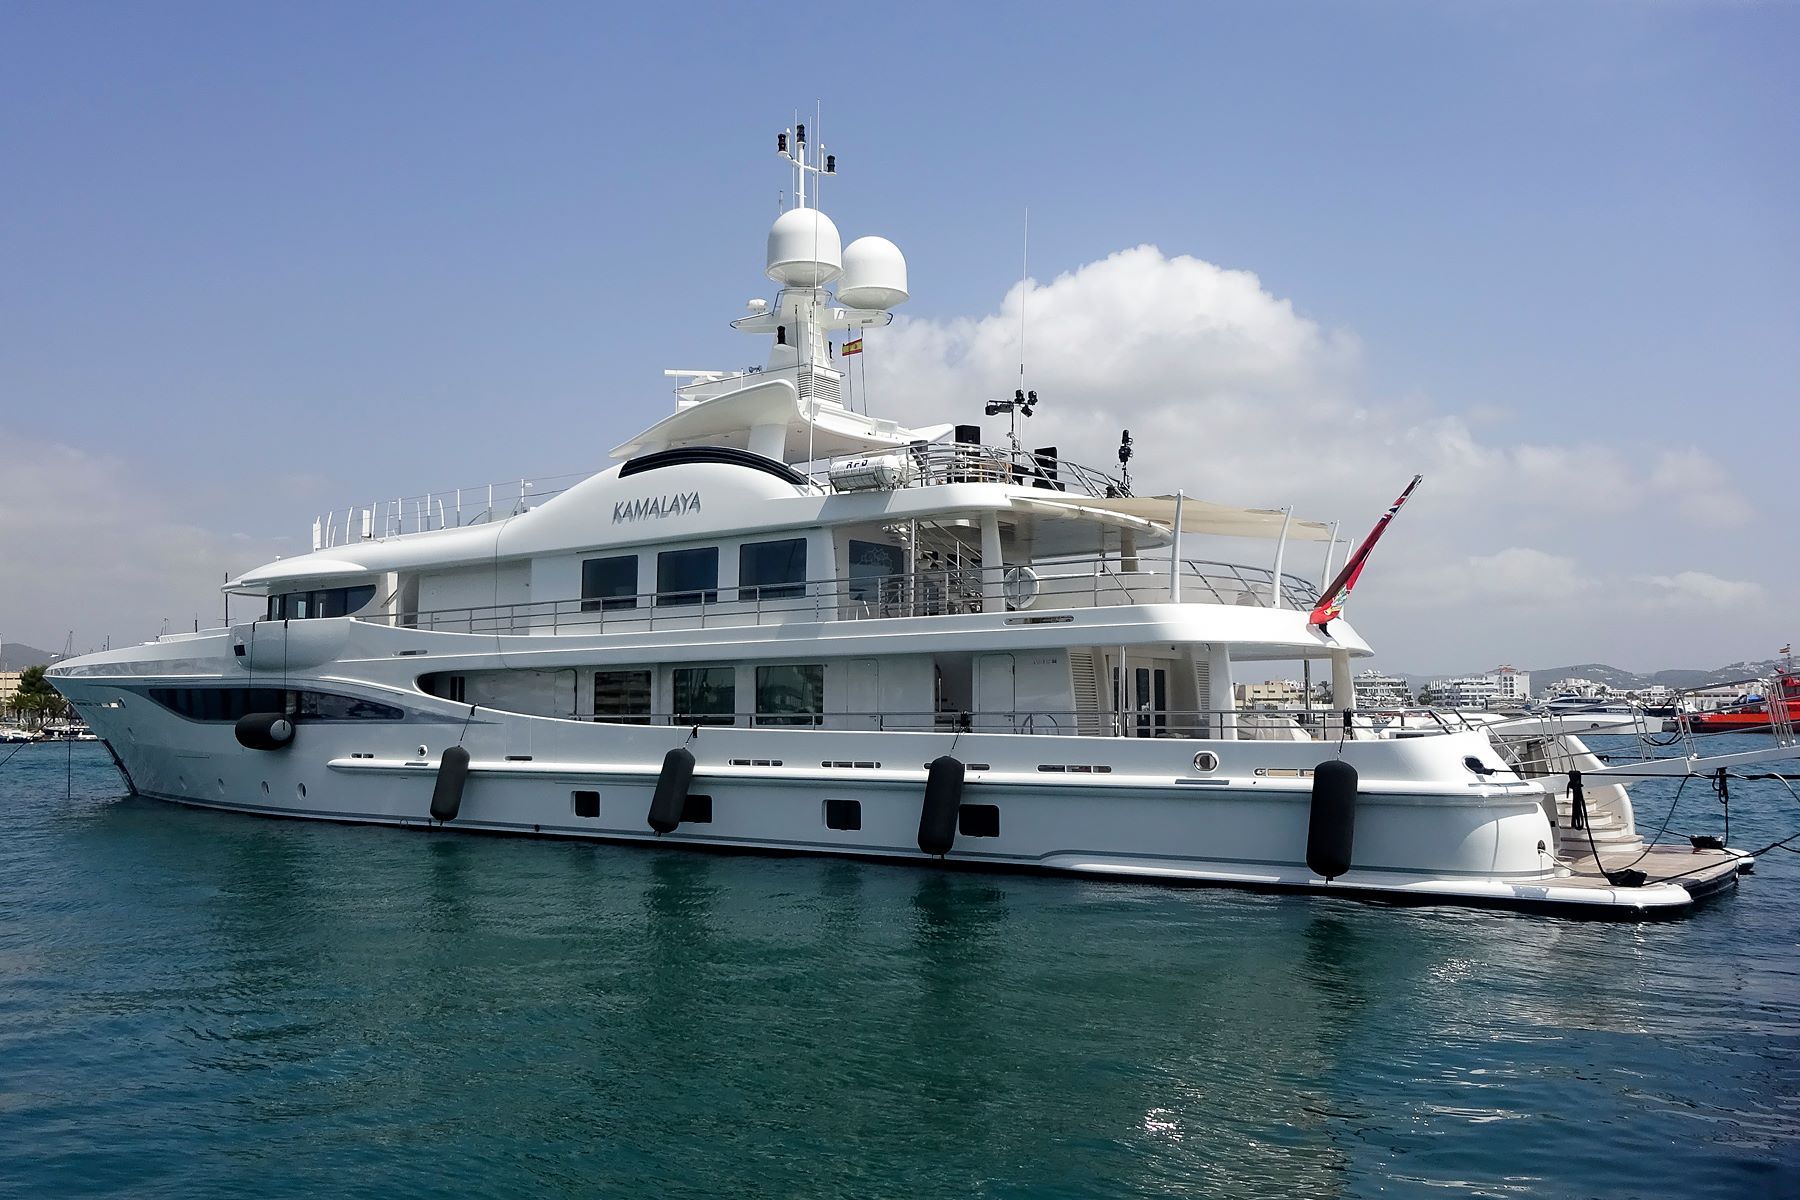 KAMALAYA Yacht • Mark Scheinberg $35M Superyacht • Amels • 2013